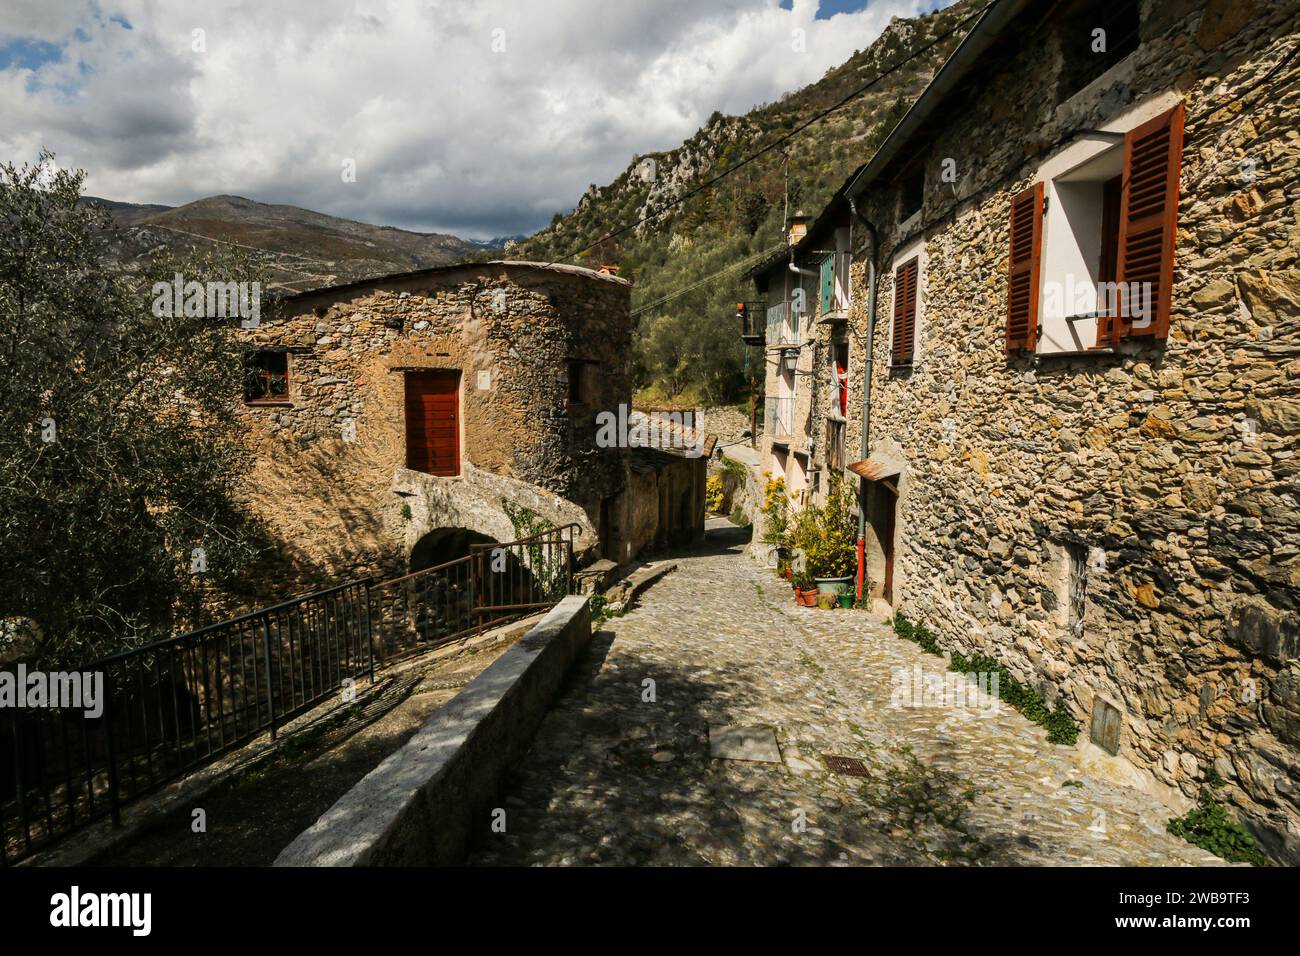 Stone path in Saorge, a medieval village in Alpes-Maritimes department, vallée de La Roya, PACA region, south-east France Stock Photo